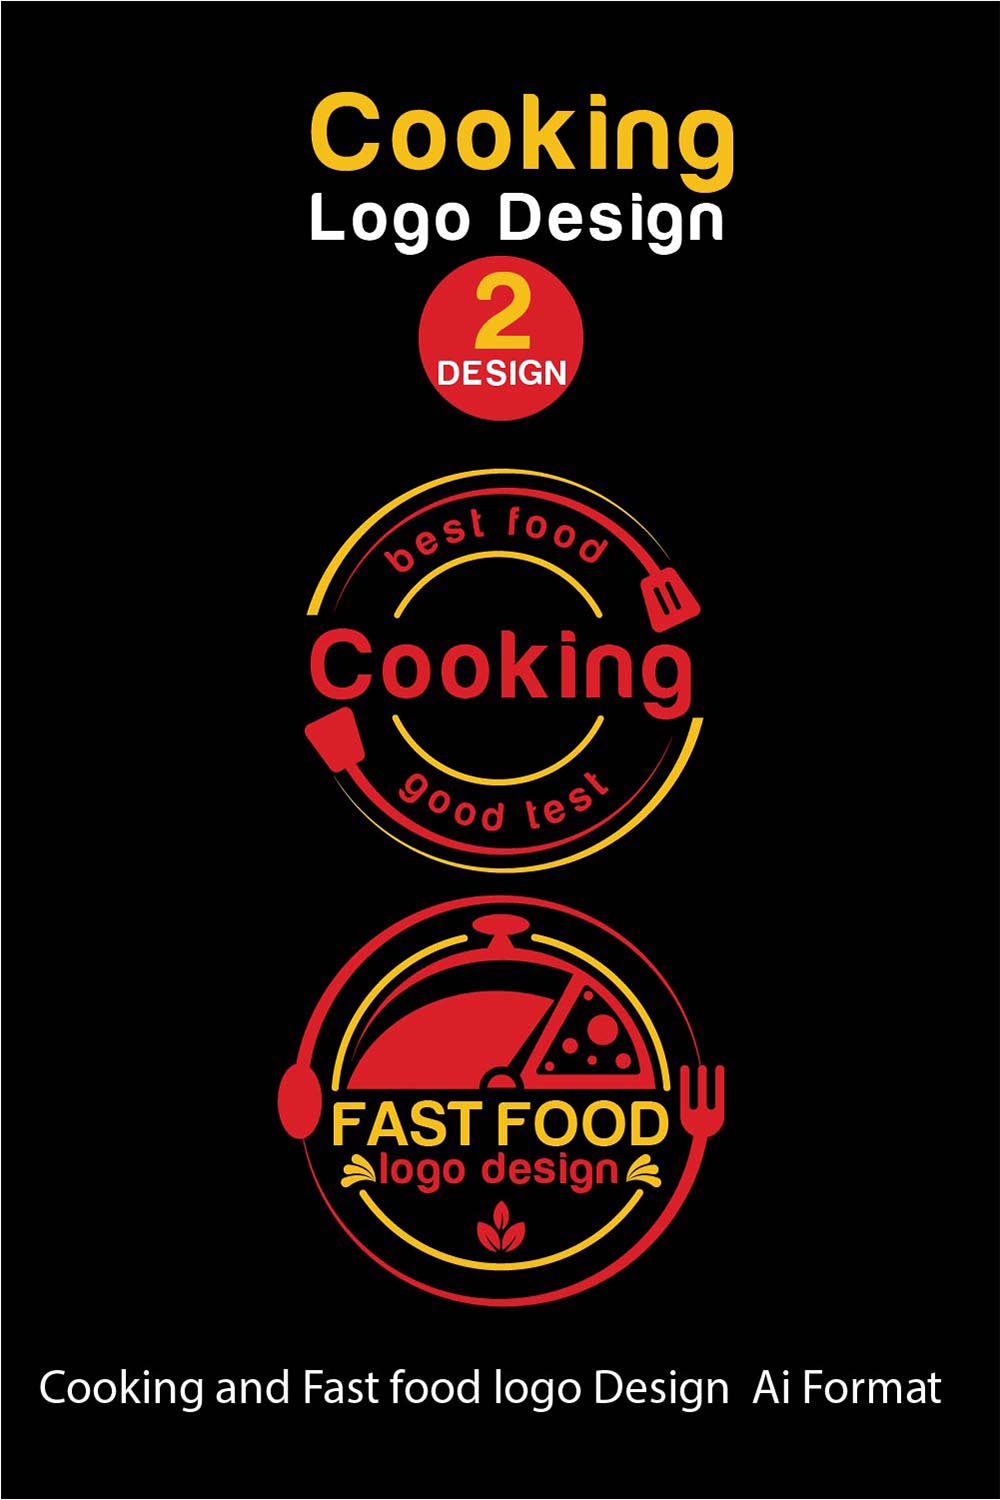 2 Fast Food Editable Logo Design pinterest image.